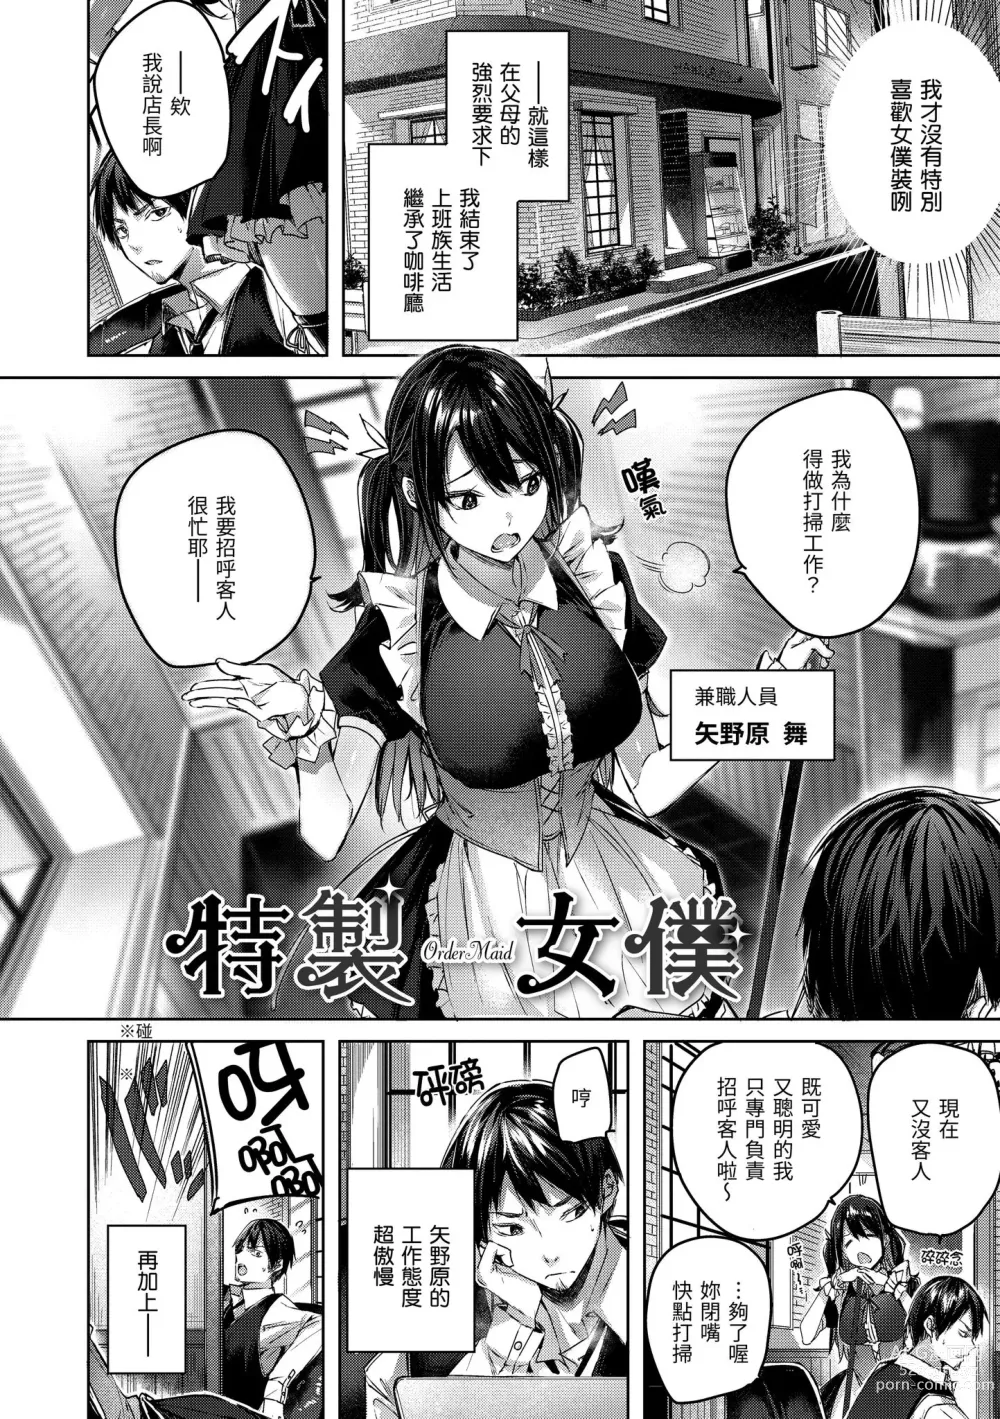 Page 5 of manga 揮灑熱浪♥️ (decensored)